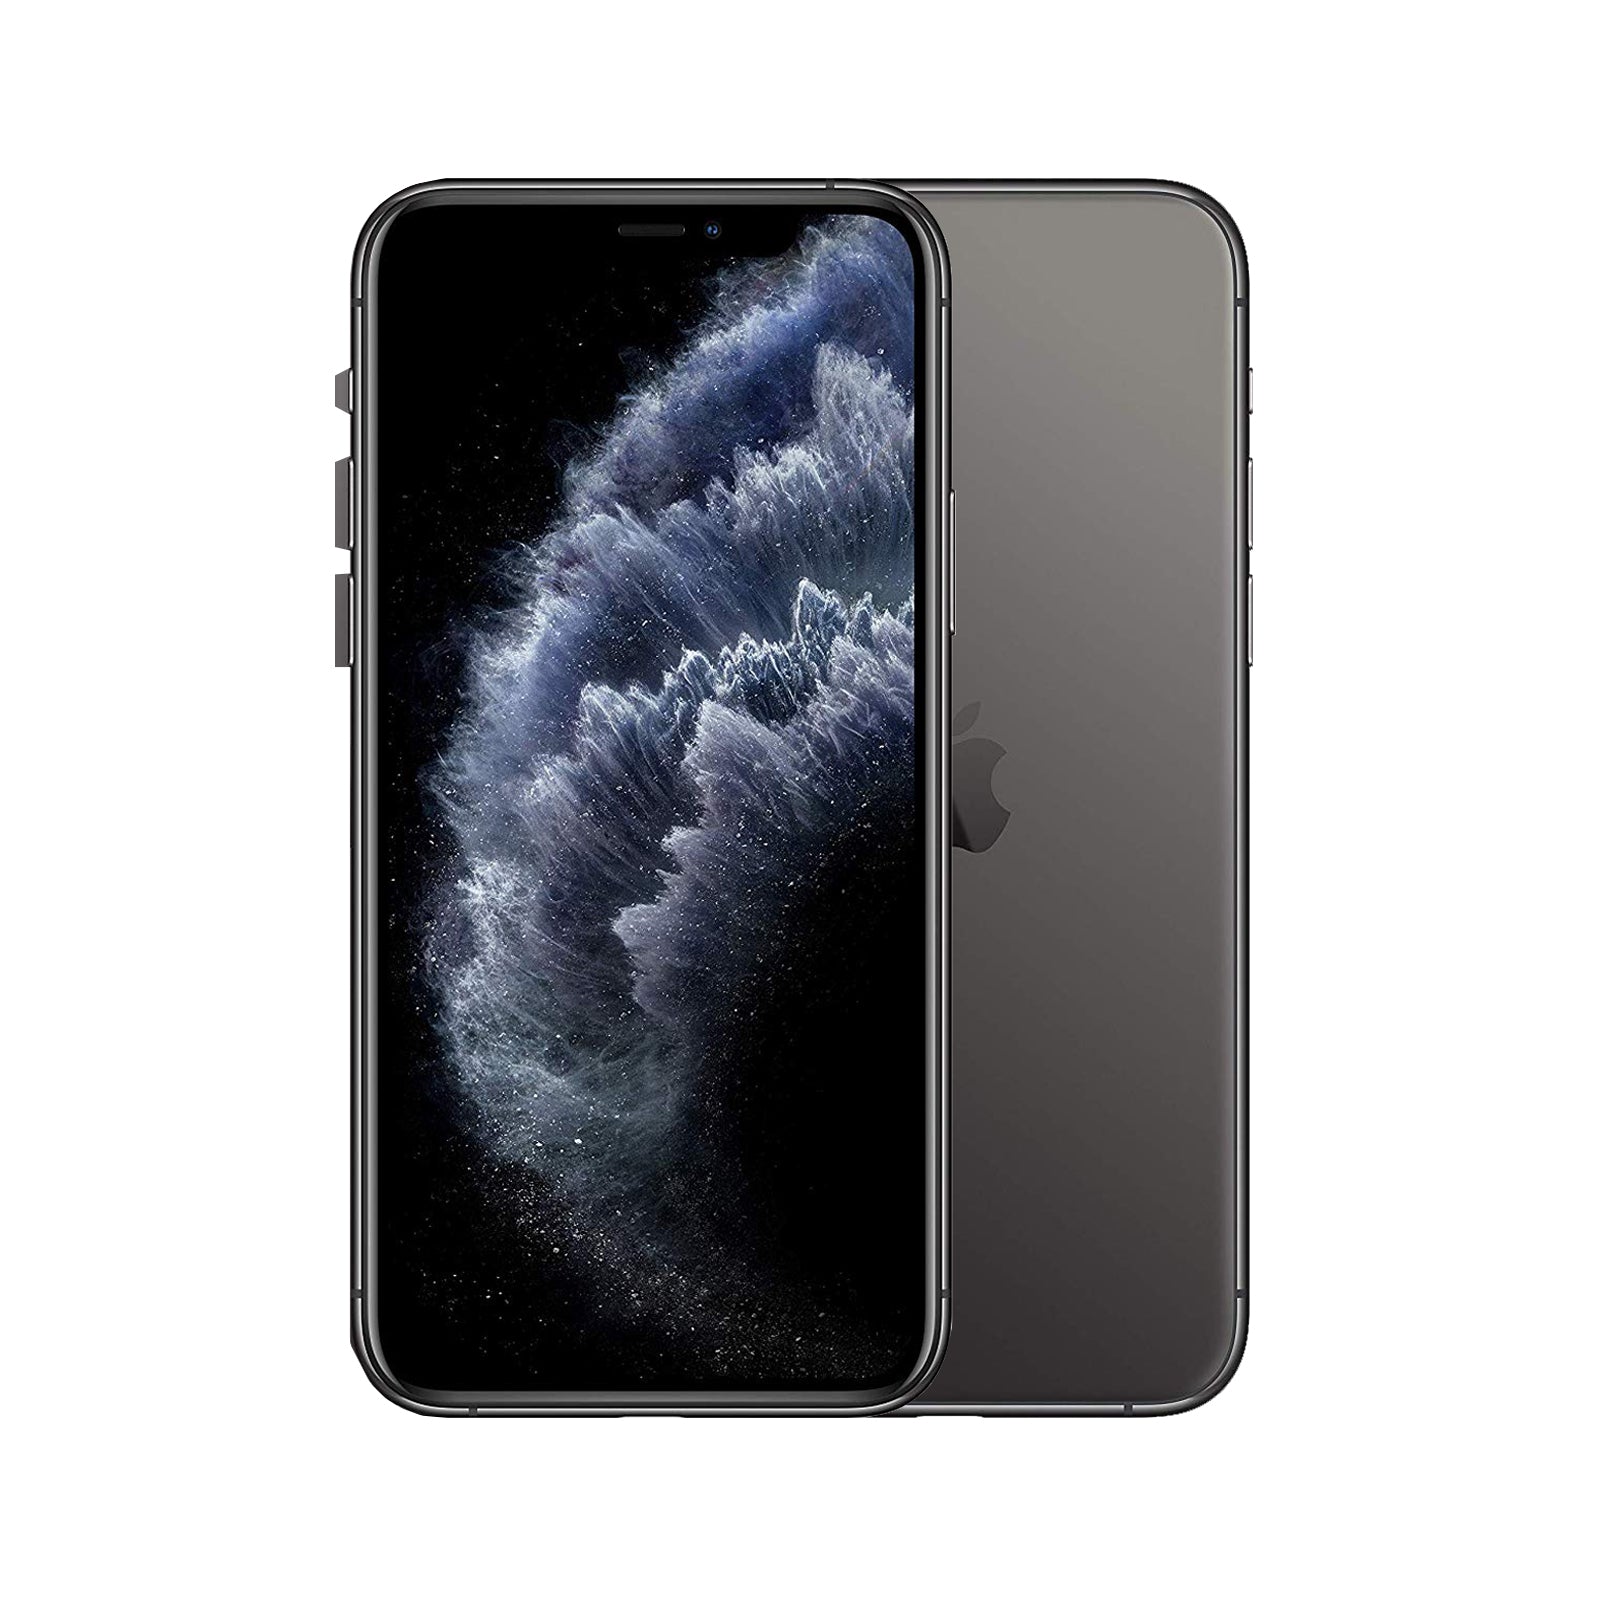 Apple iPhone 11 Pro Max 256GB Grey - Good - Refurbished